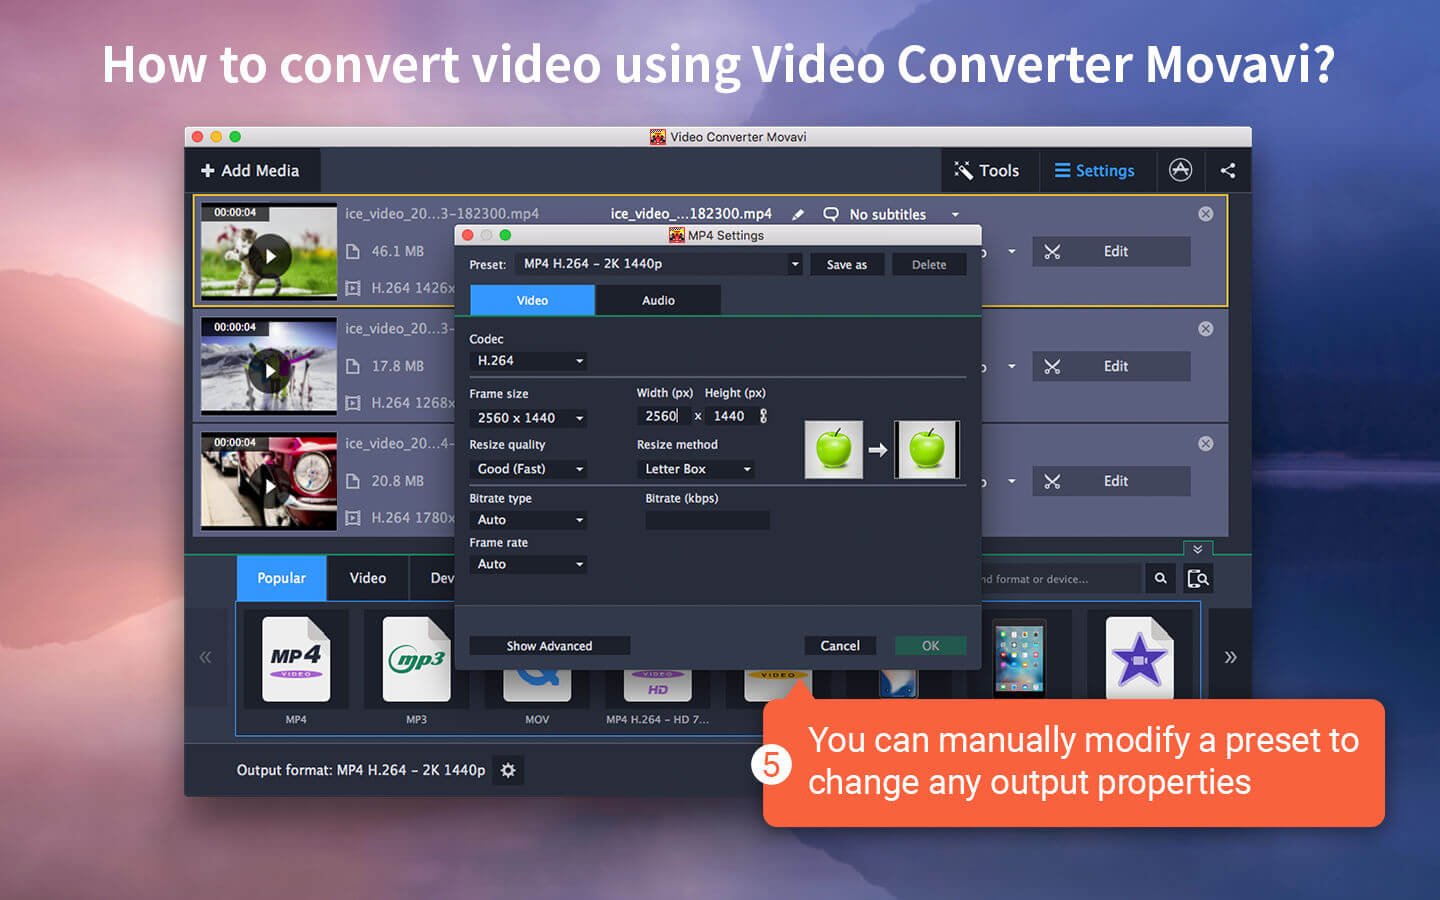 macx video converter pro to movari